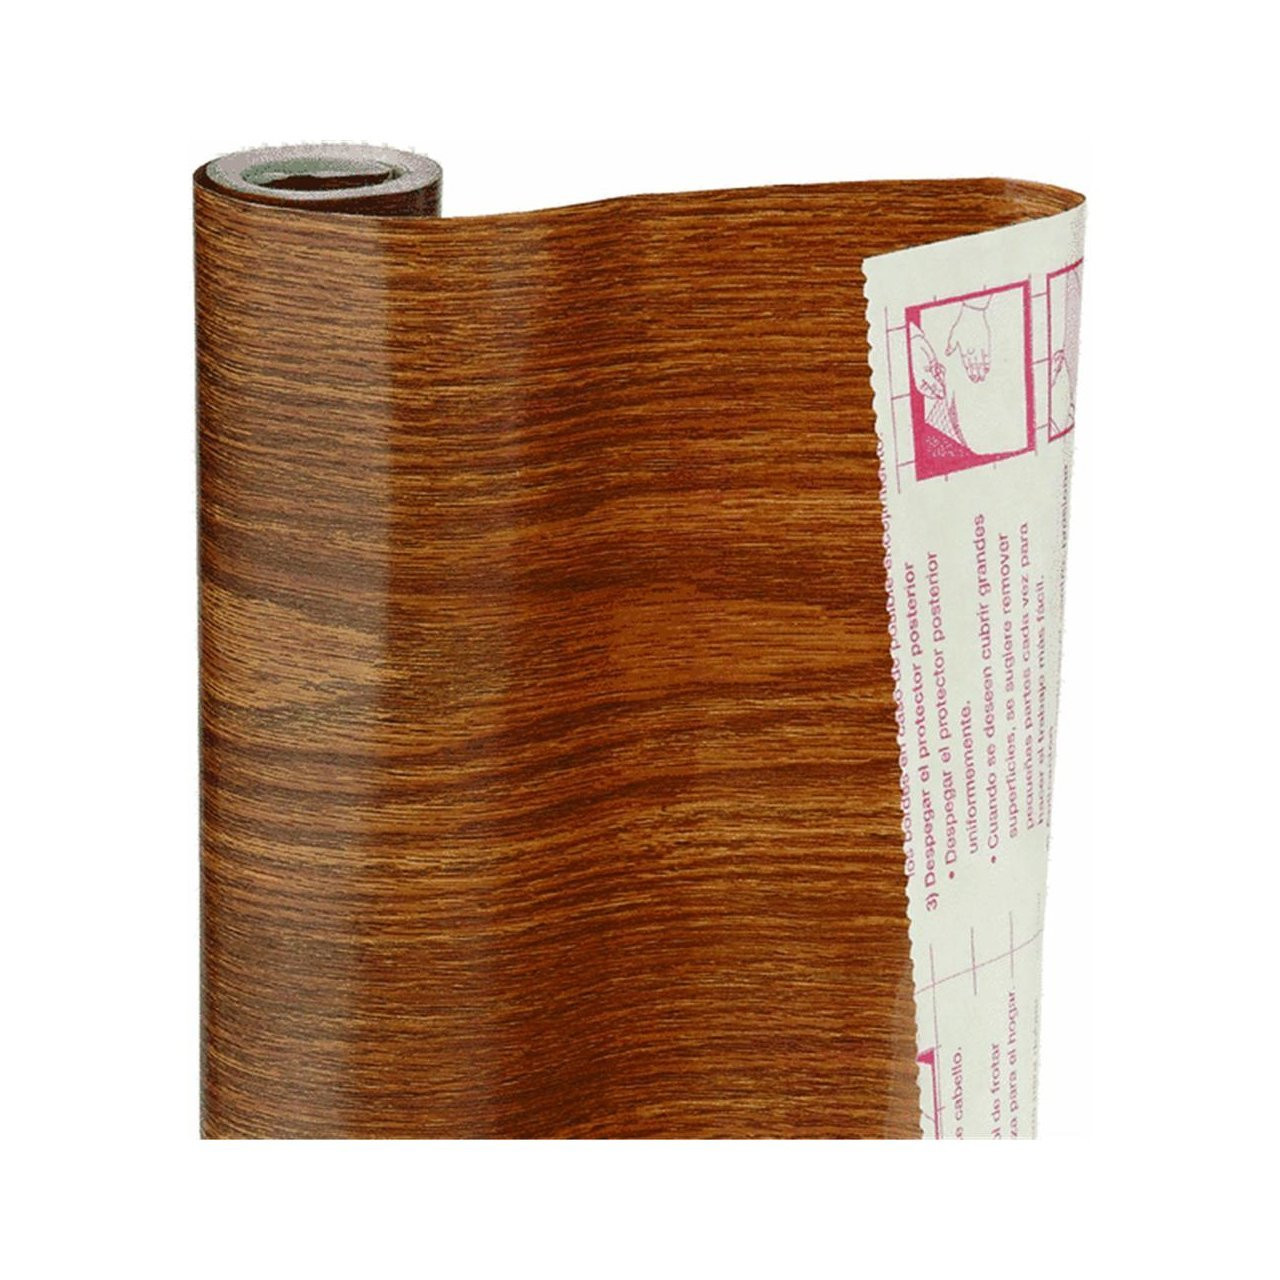 Vintage Hardwood Flooring Ontario Of Amazon Com Ultra Honey Oak Adhesive Contact Paper Multipurpose Paper Pertaining to 71gthel0gjl Sl1280